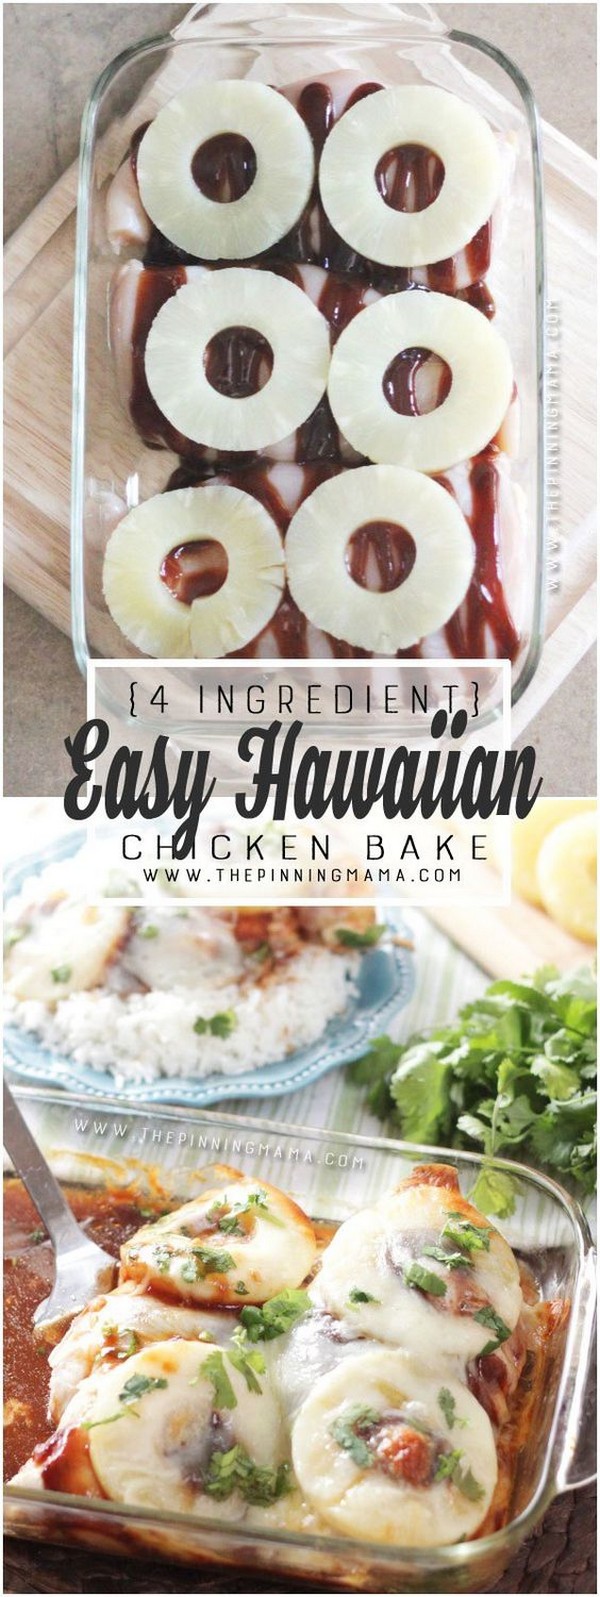 Hawaiian Chicken Bake Recipe